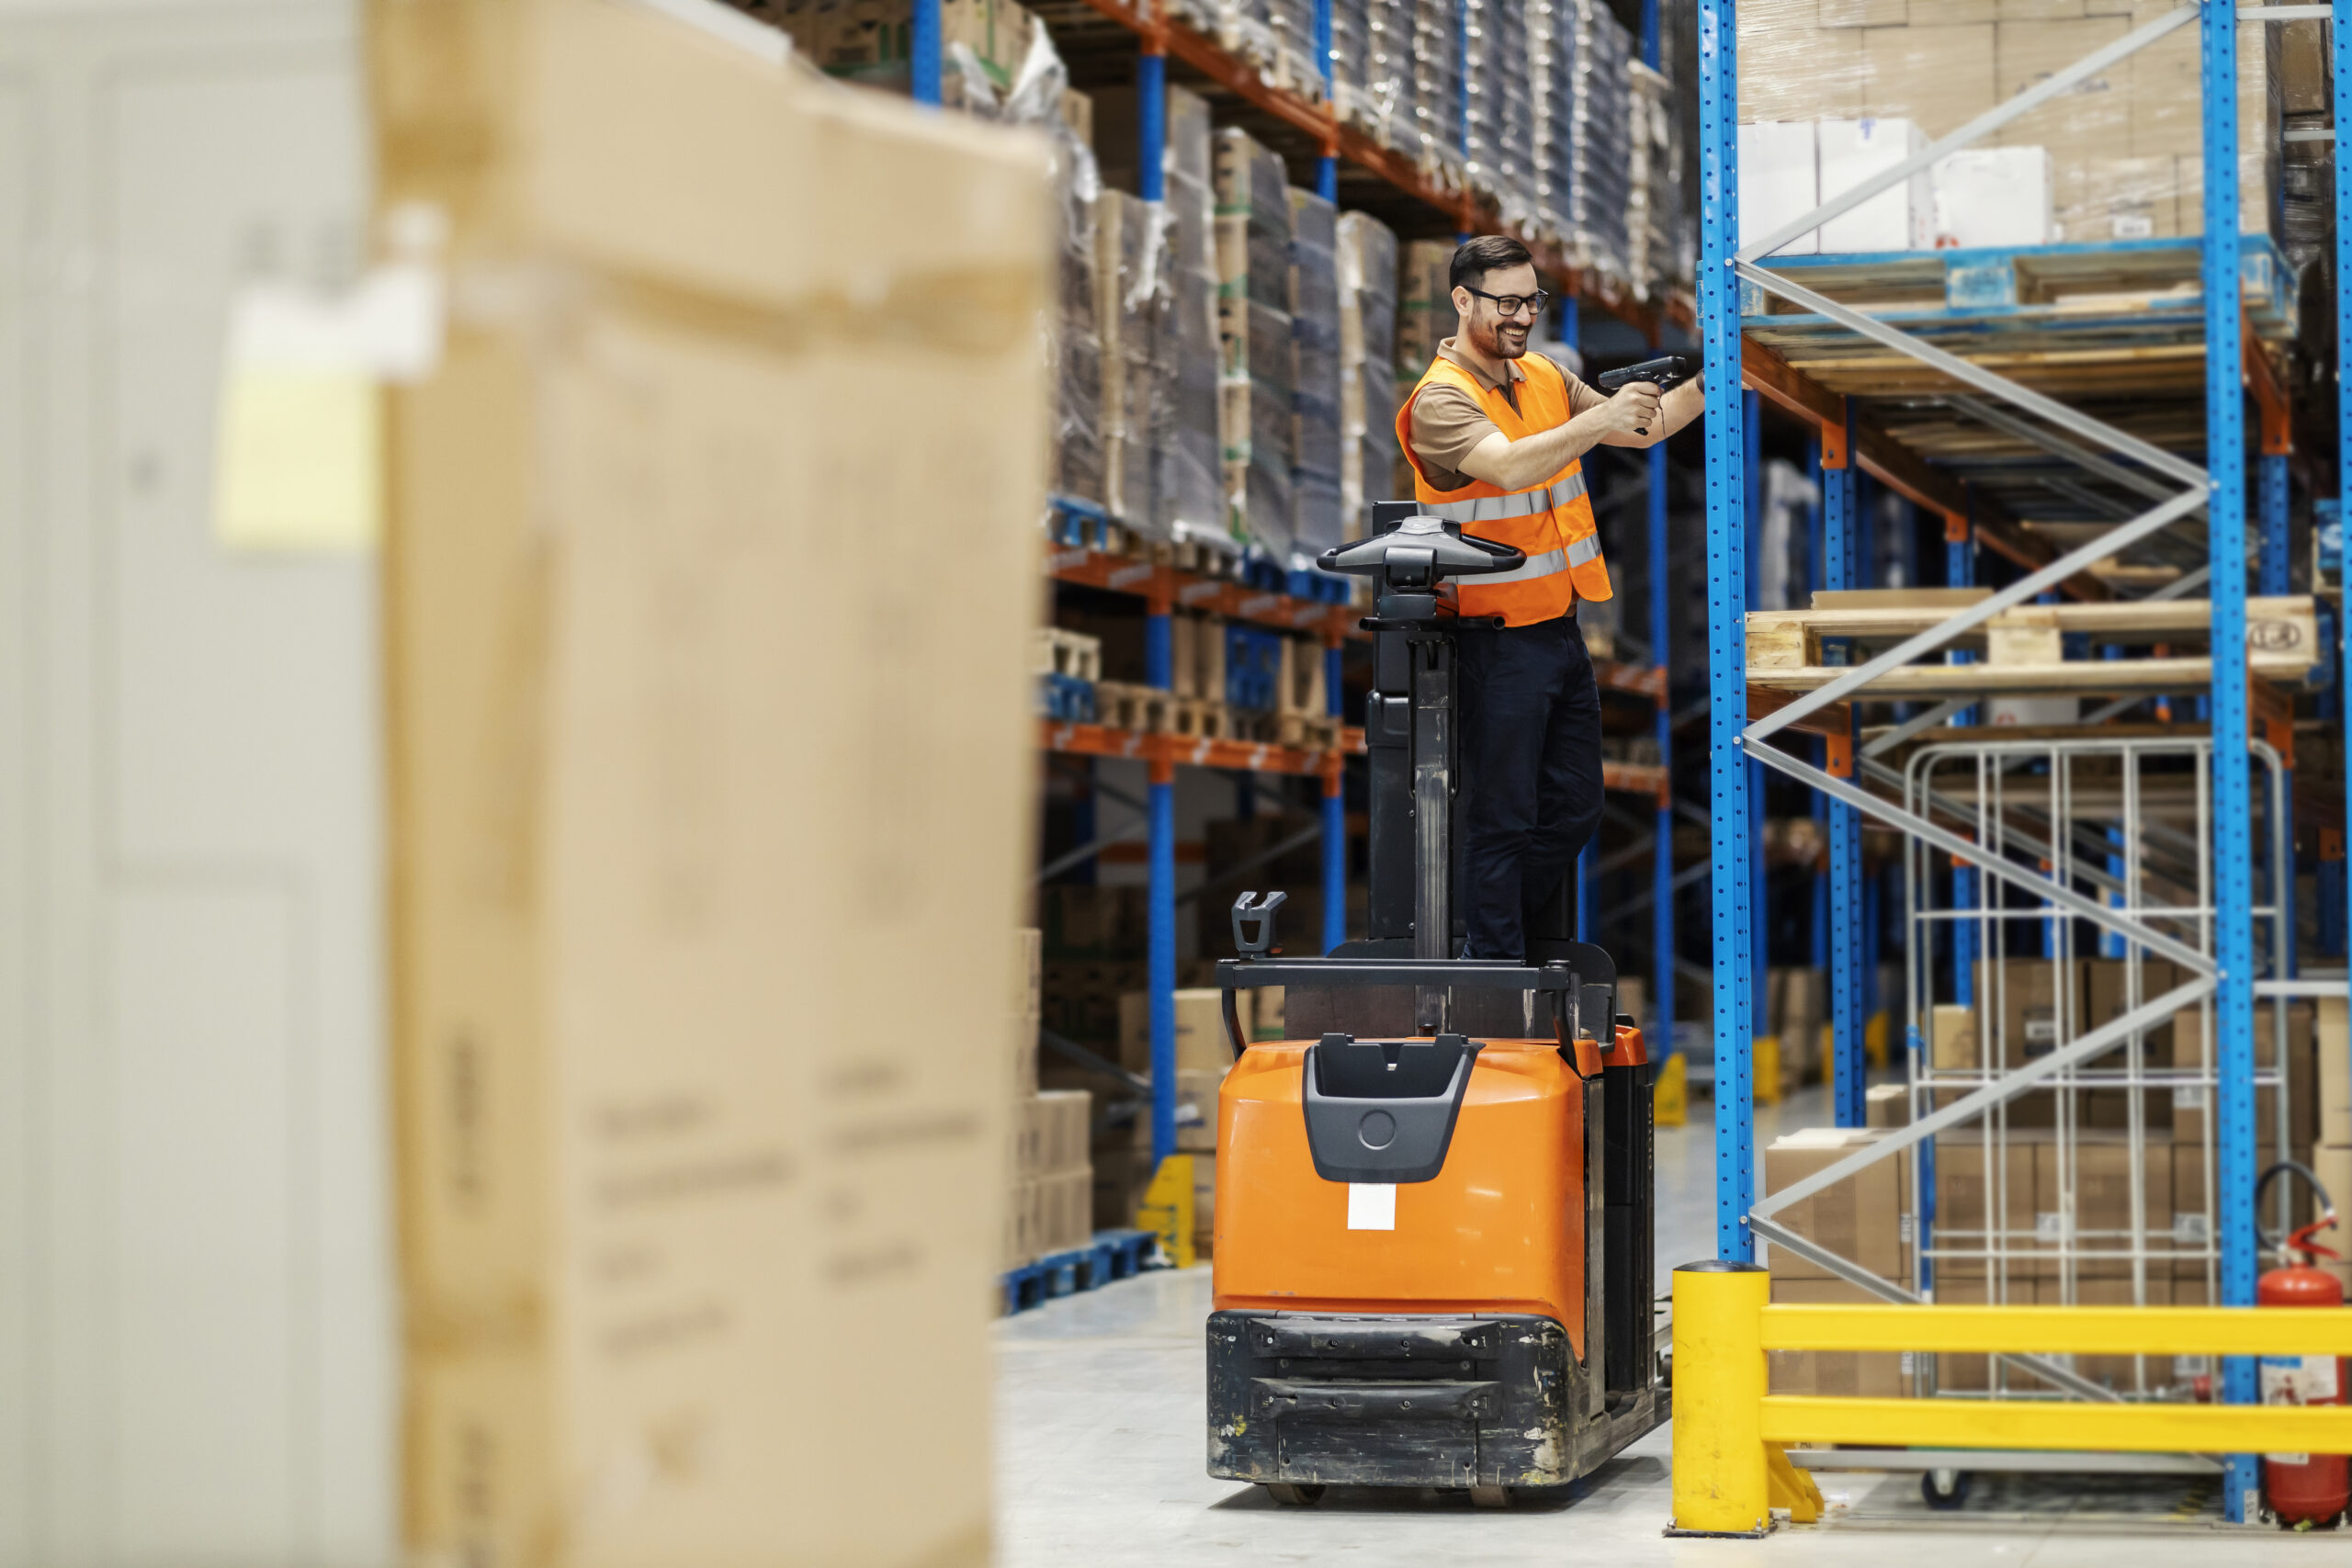 How to Ship to Amazon FBA Warehouse